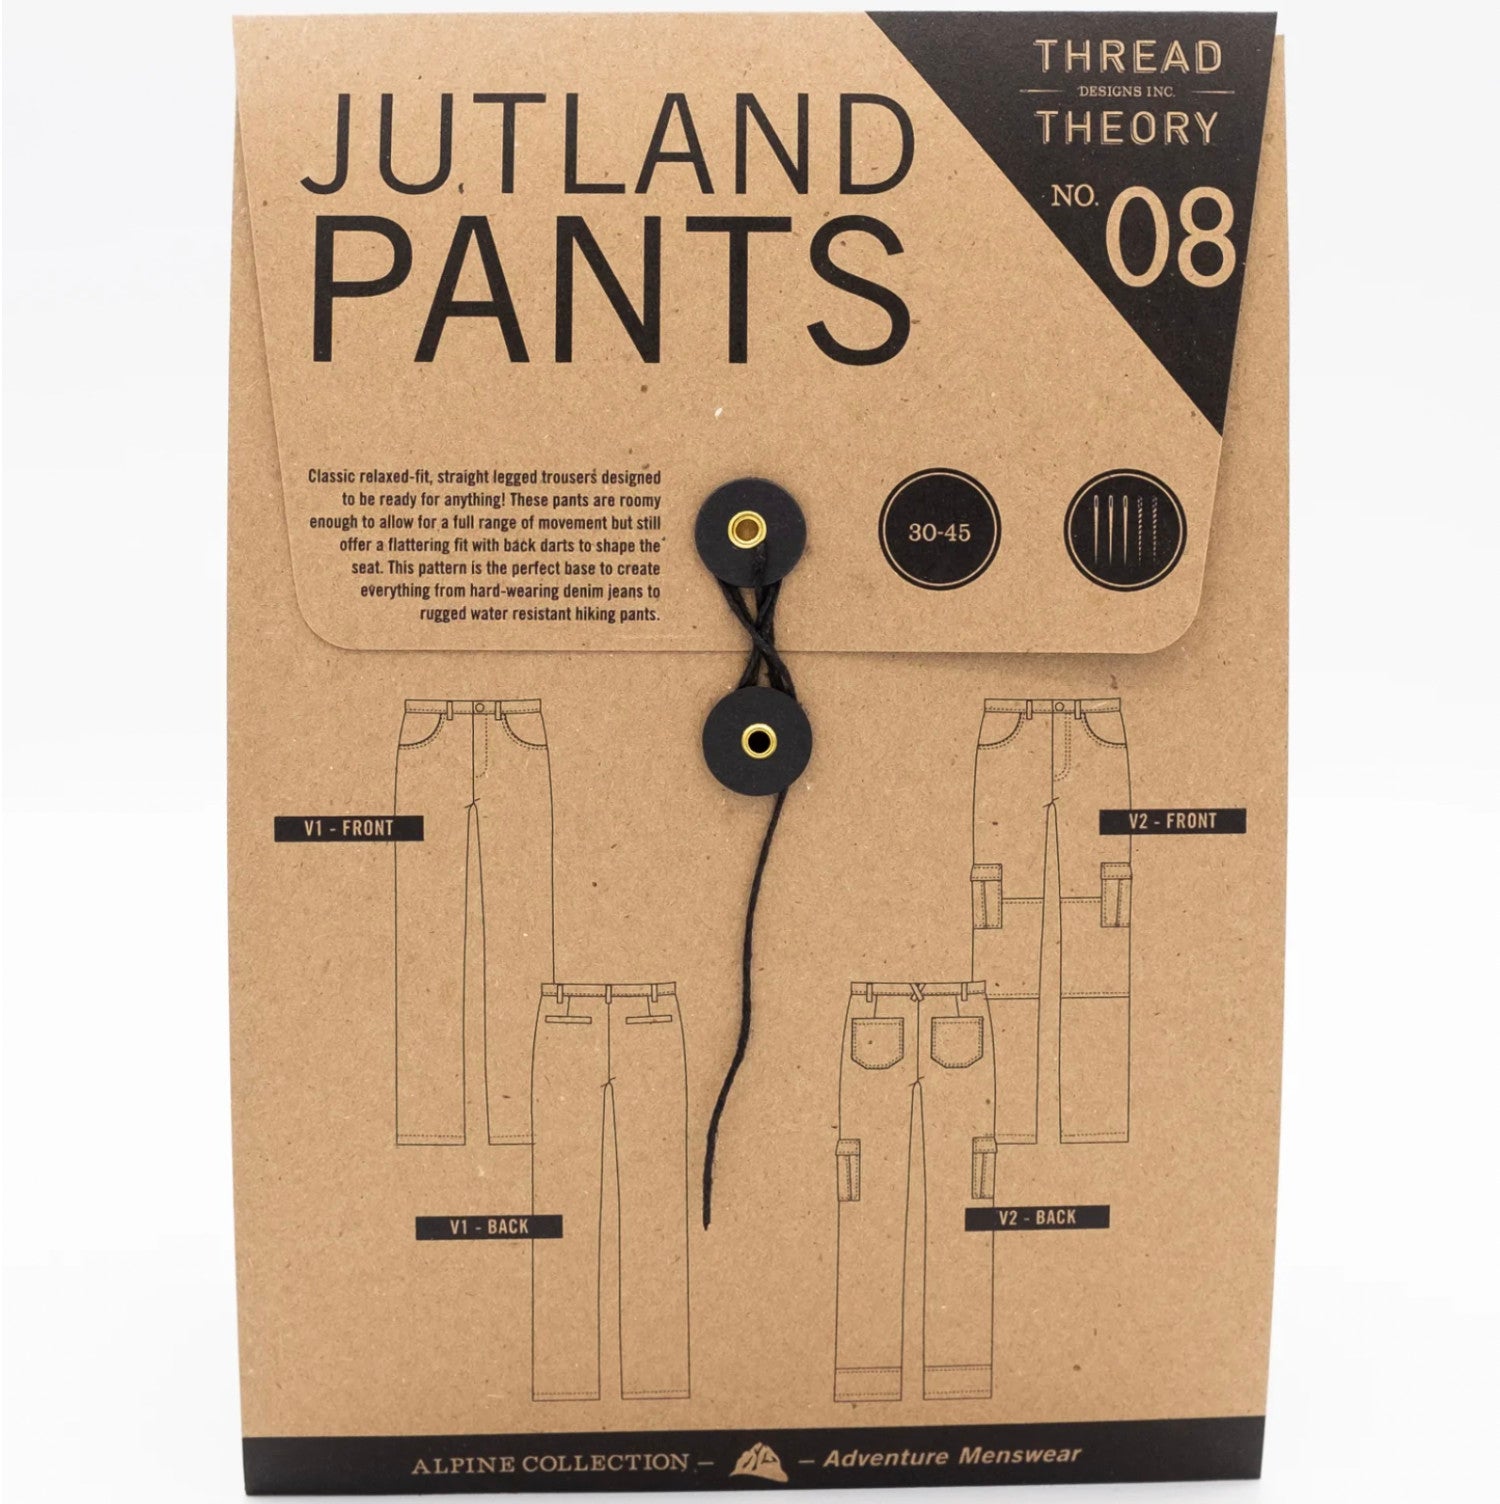 Thread Theory Jutland Pants Pattern – Brooklyn General Store